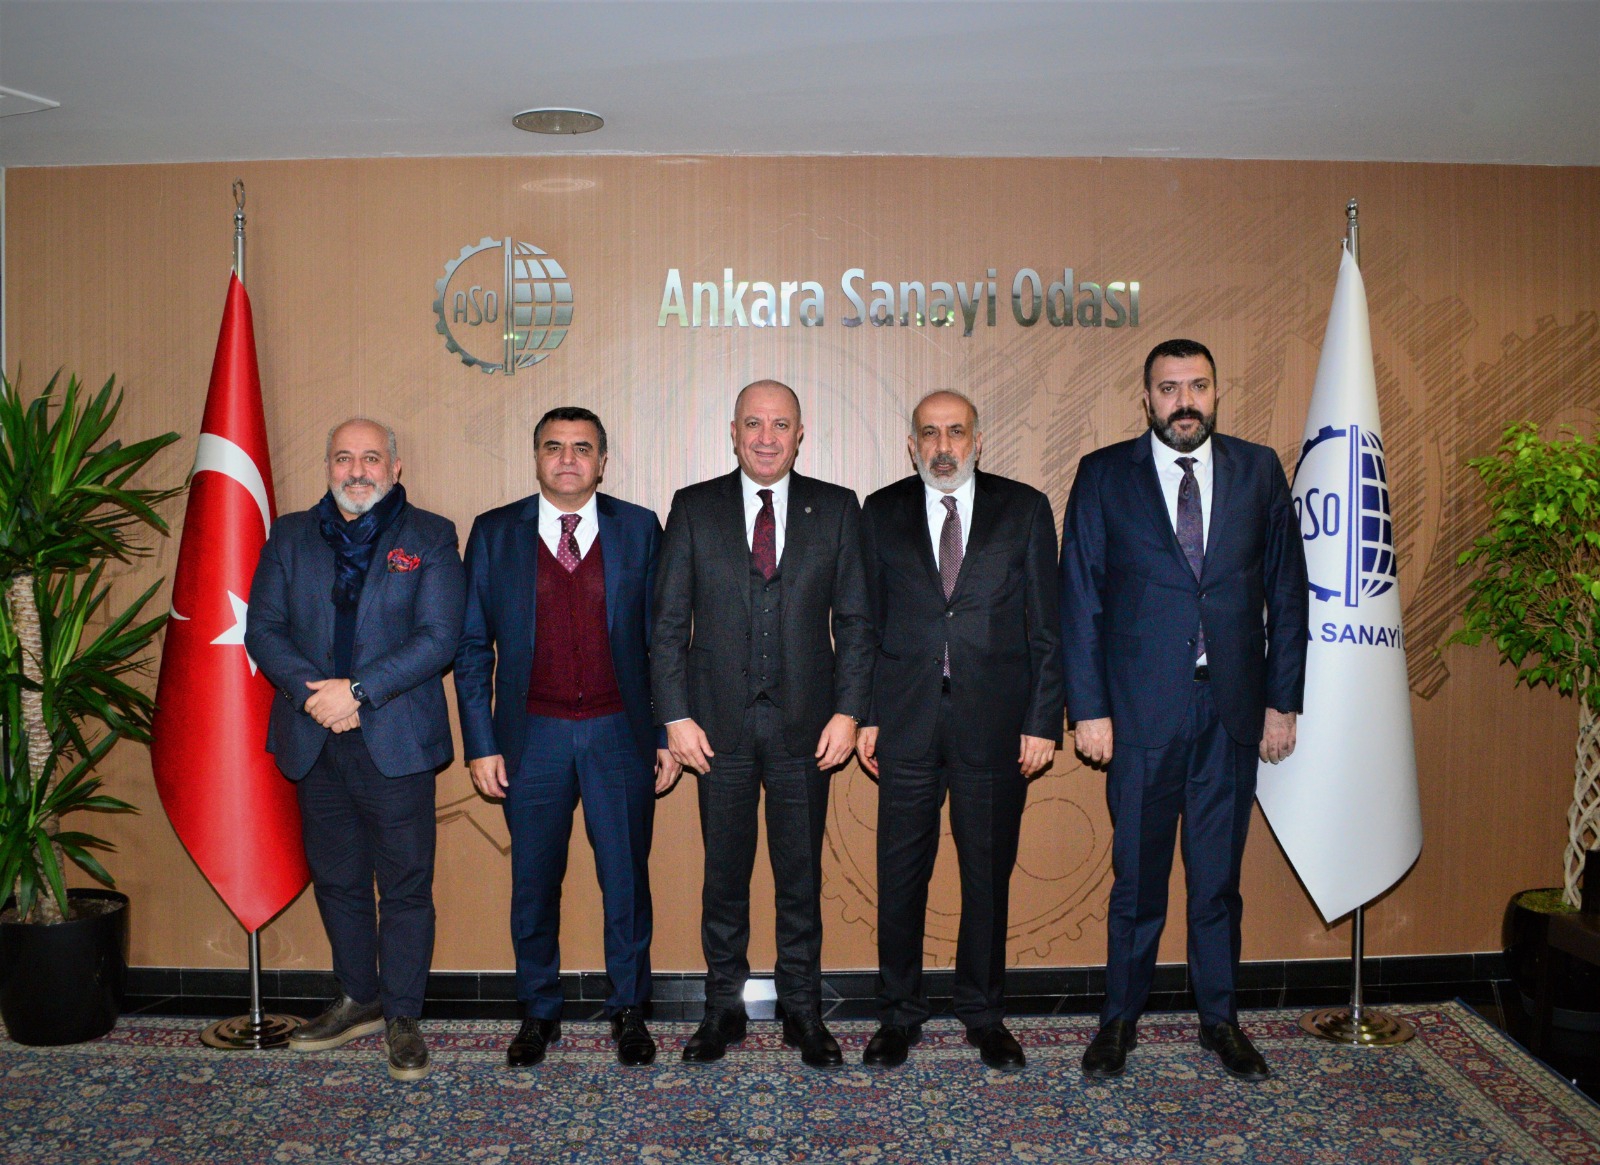 Ankara Sanayi Odası Başkanı Seyit Ardıç'a, "Hayırlı Olsun" ziyareti